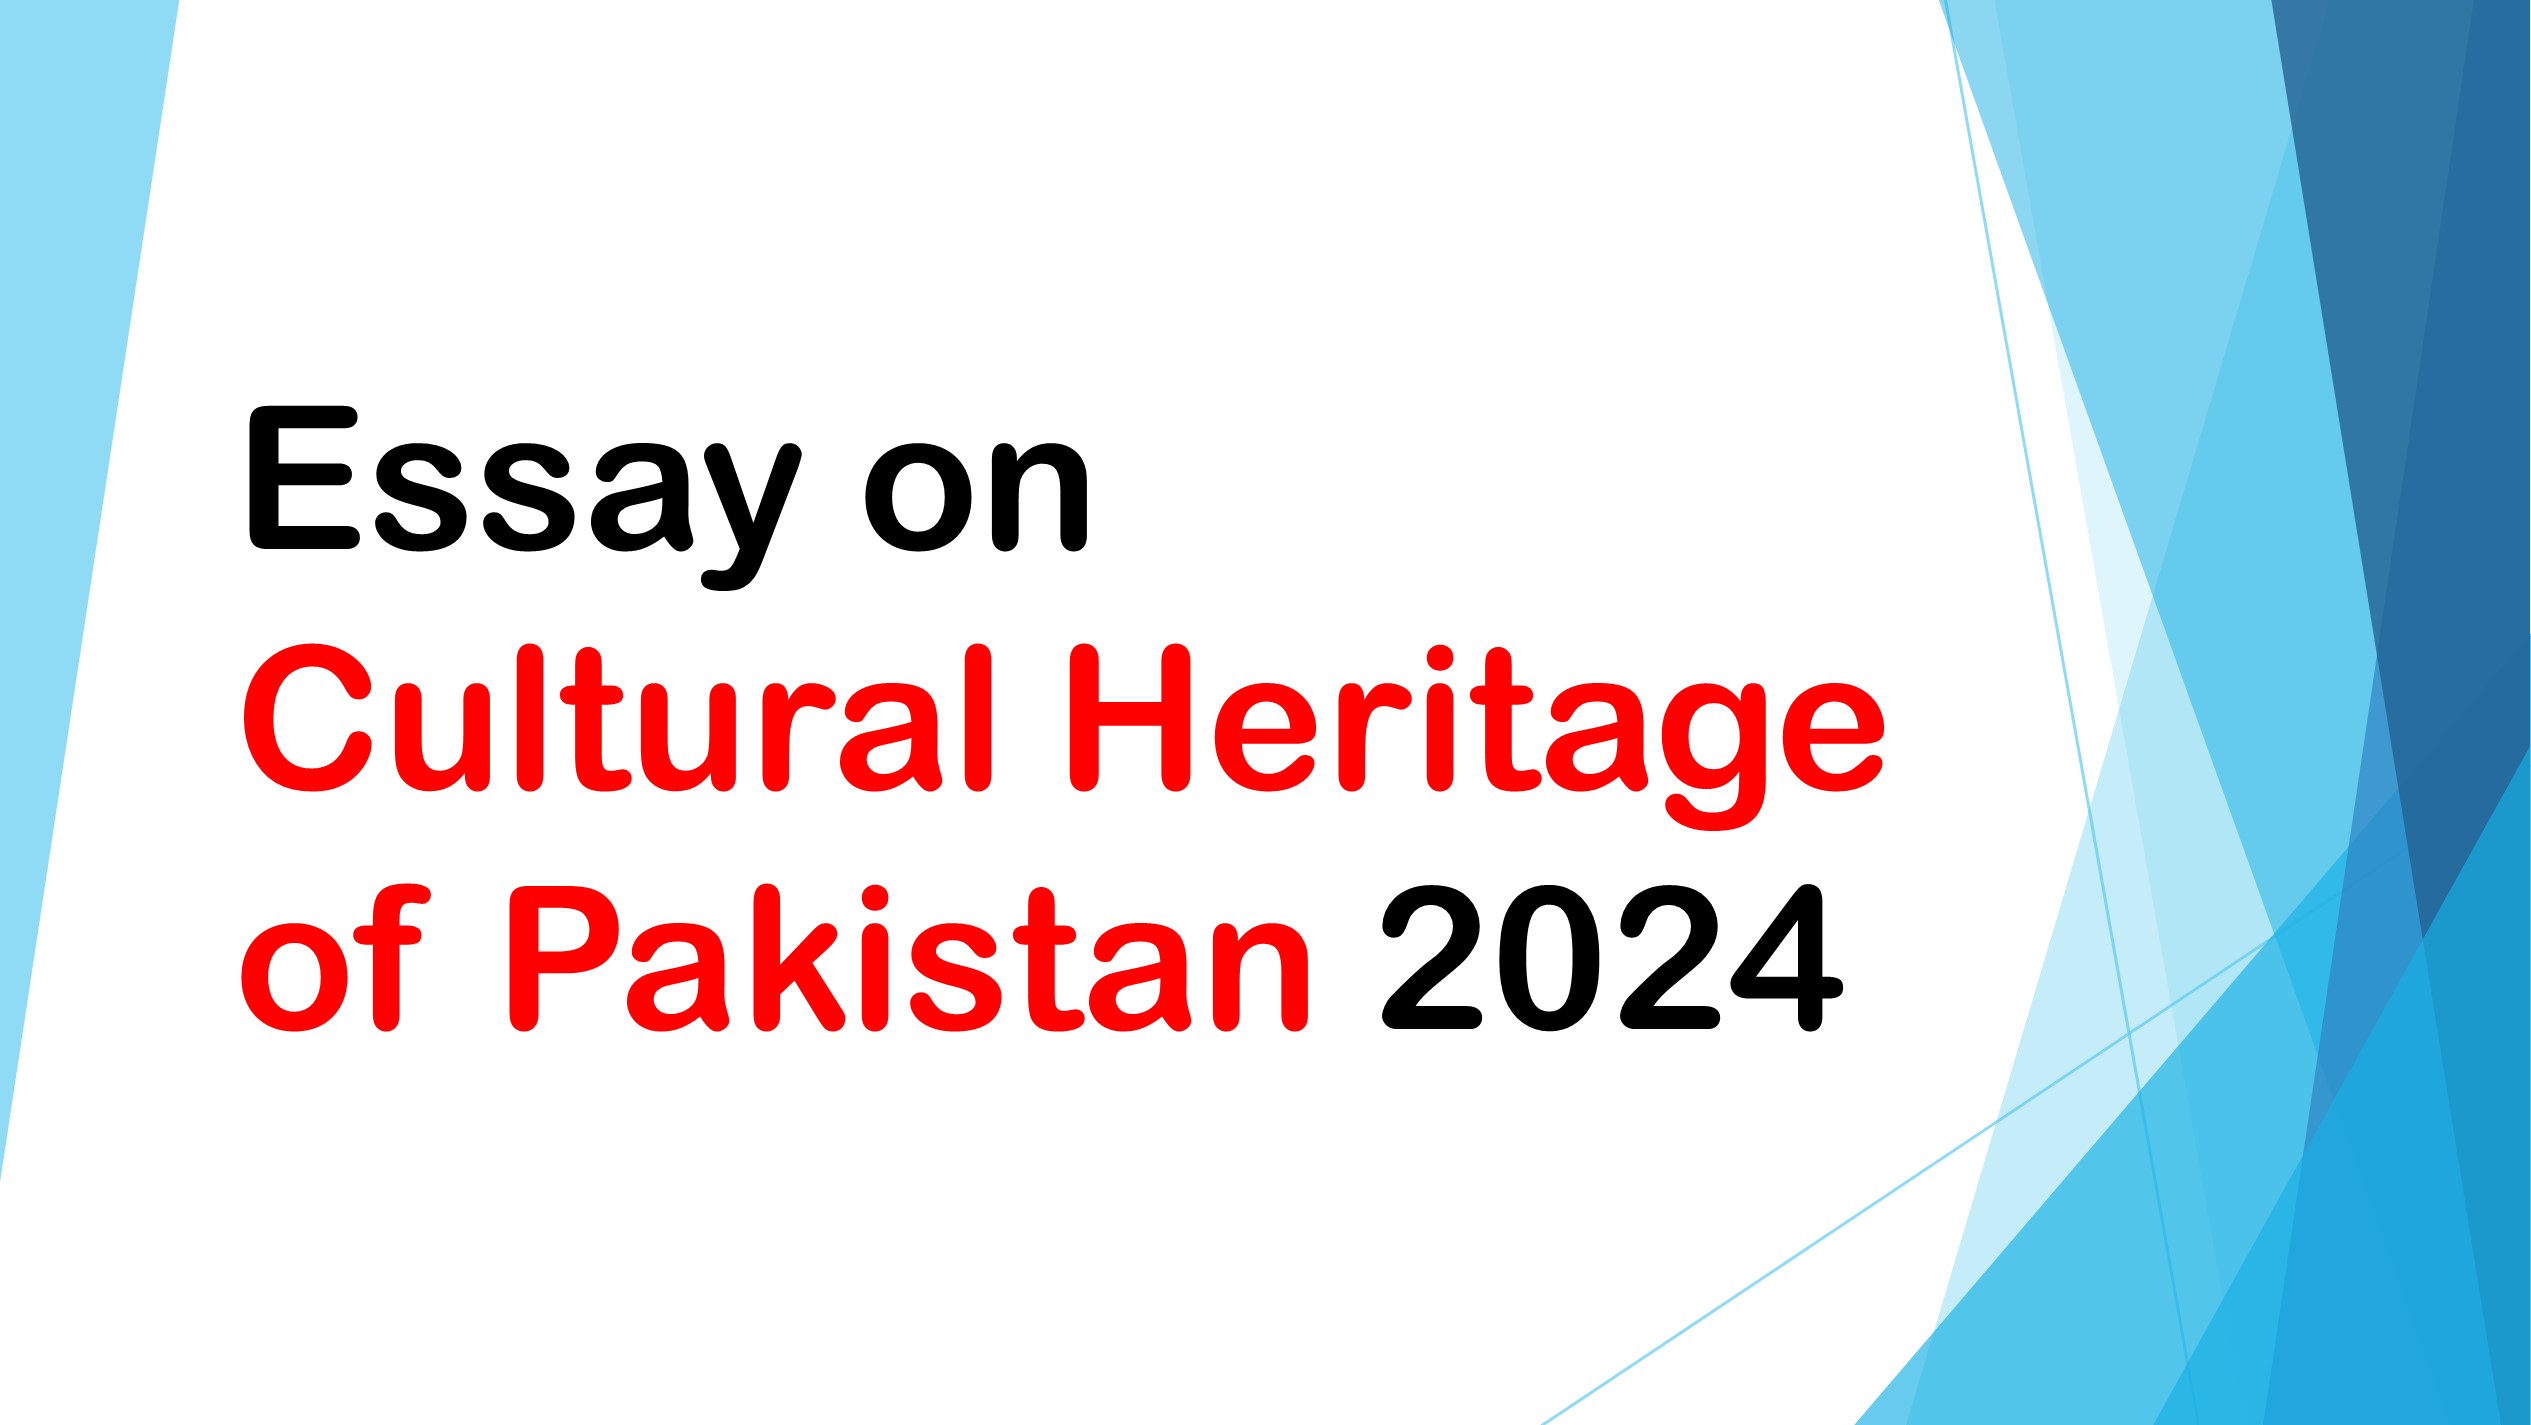 Essay on Cultural Heritage of Pakistan 2024